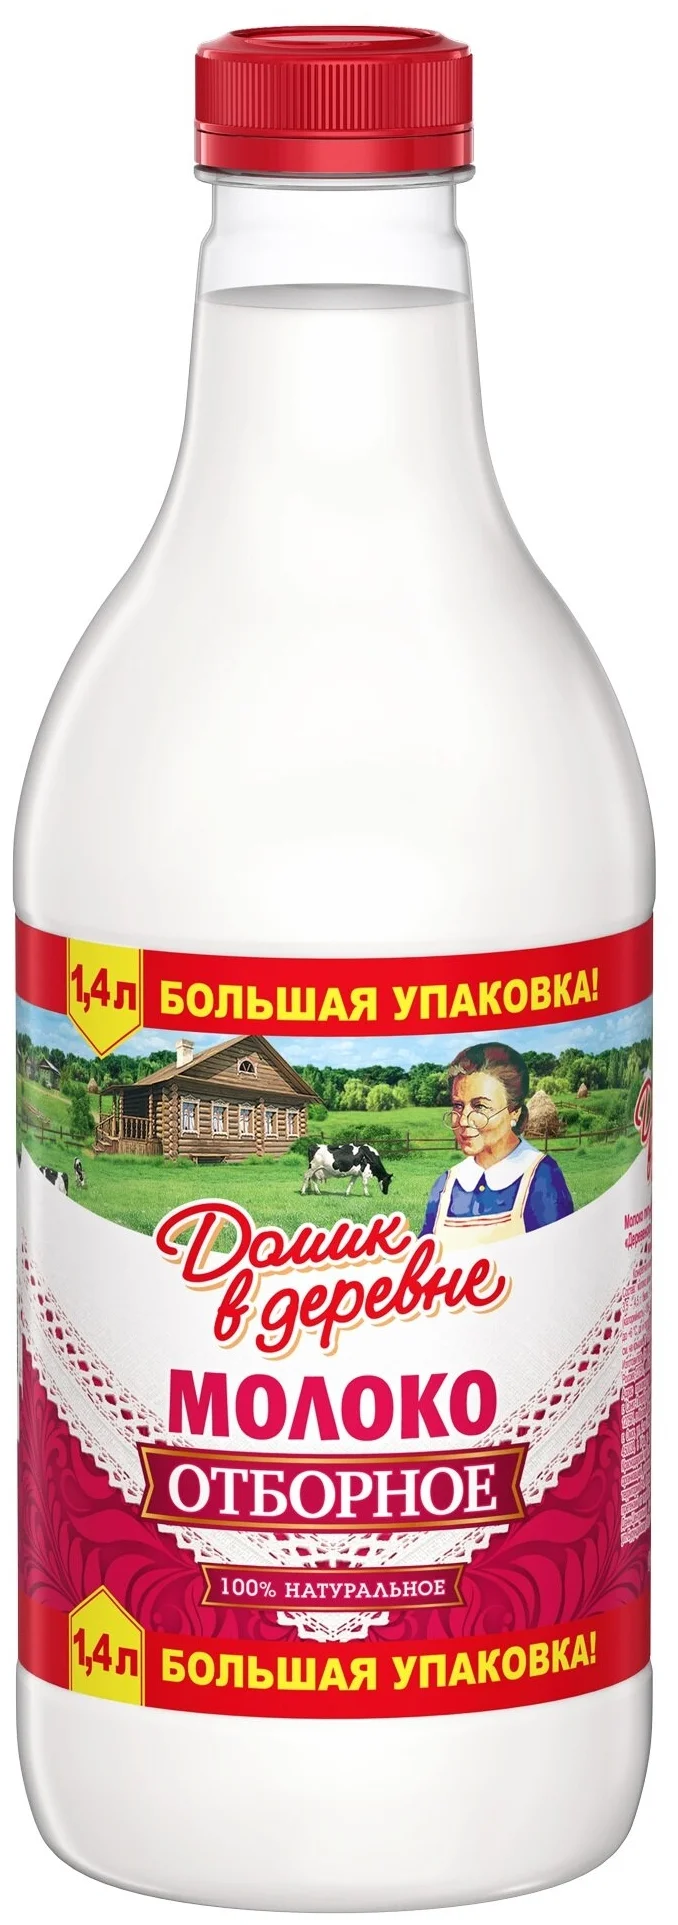 Домик в деревне 3.5%, 1 шт. 1.4 л - тип молока: коровье